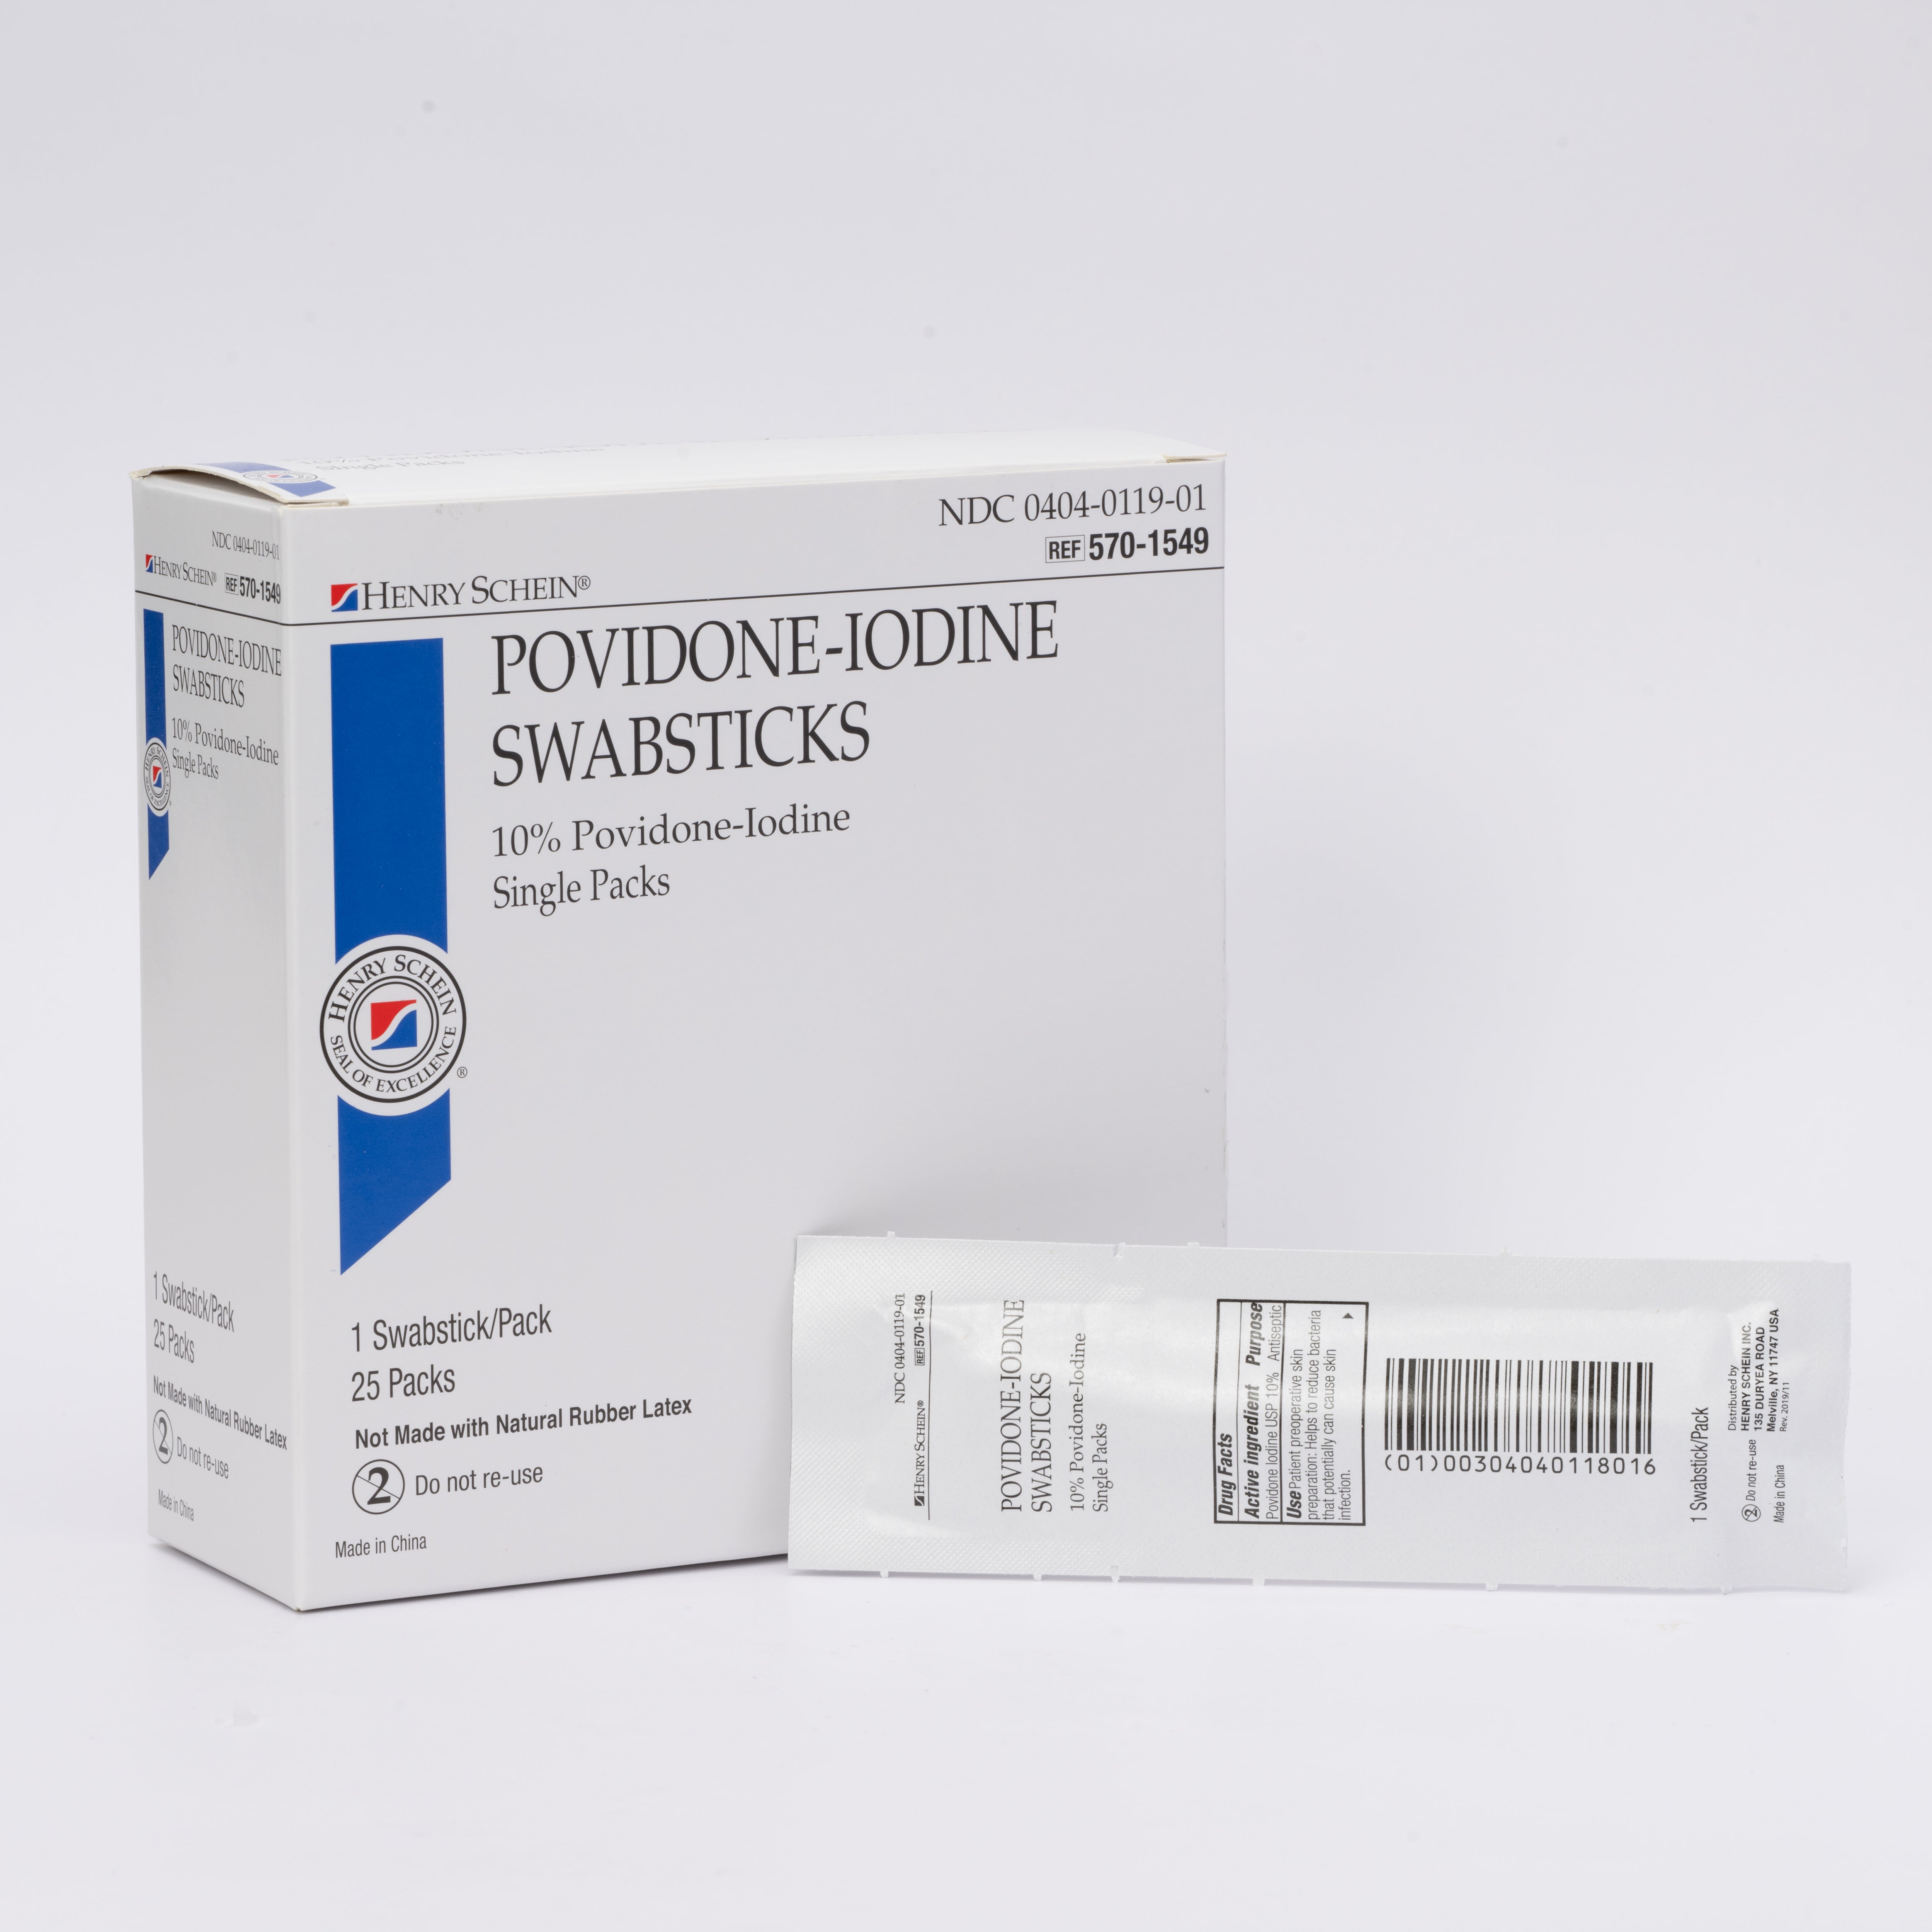 Henry Schein Prep Povidone-Iodine Swabsticks 3's, Individually Packed, Sterile, Antiseptic for Skin Preparation, 10% Povidone-Iodine- 25/BX